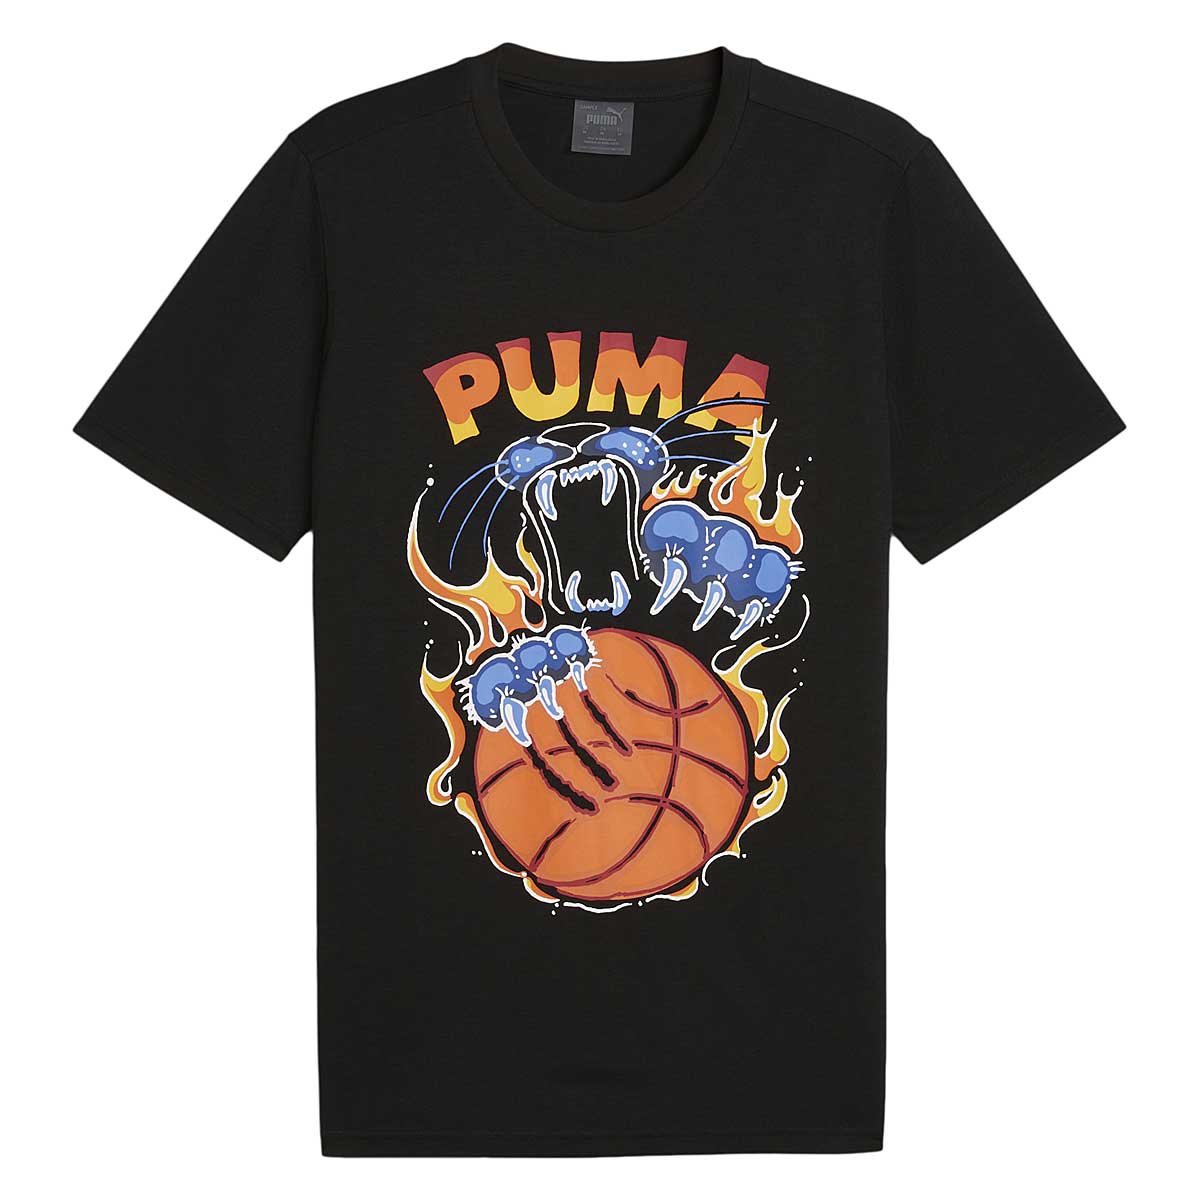 Puma Tsa T-shirt 6, Schwarz S